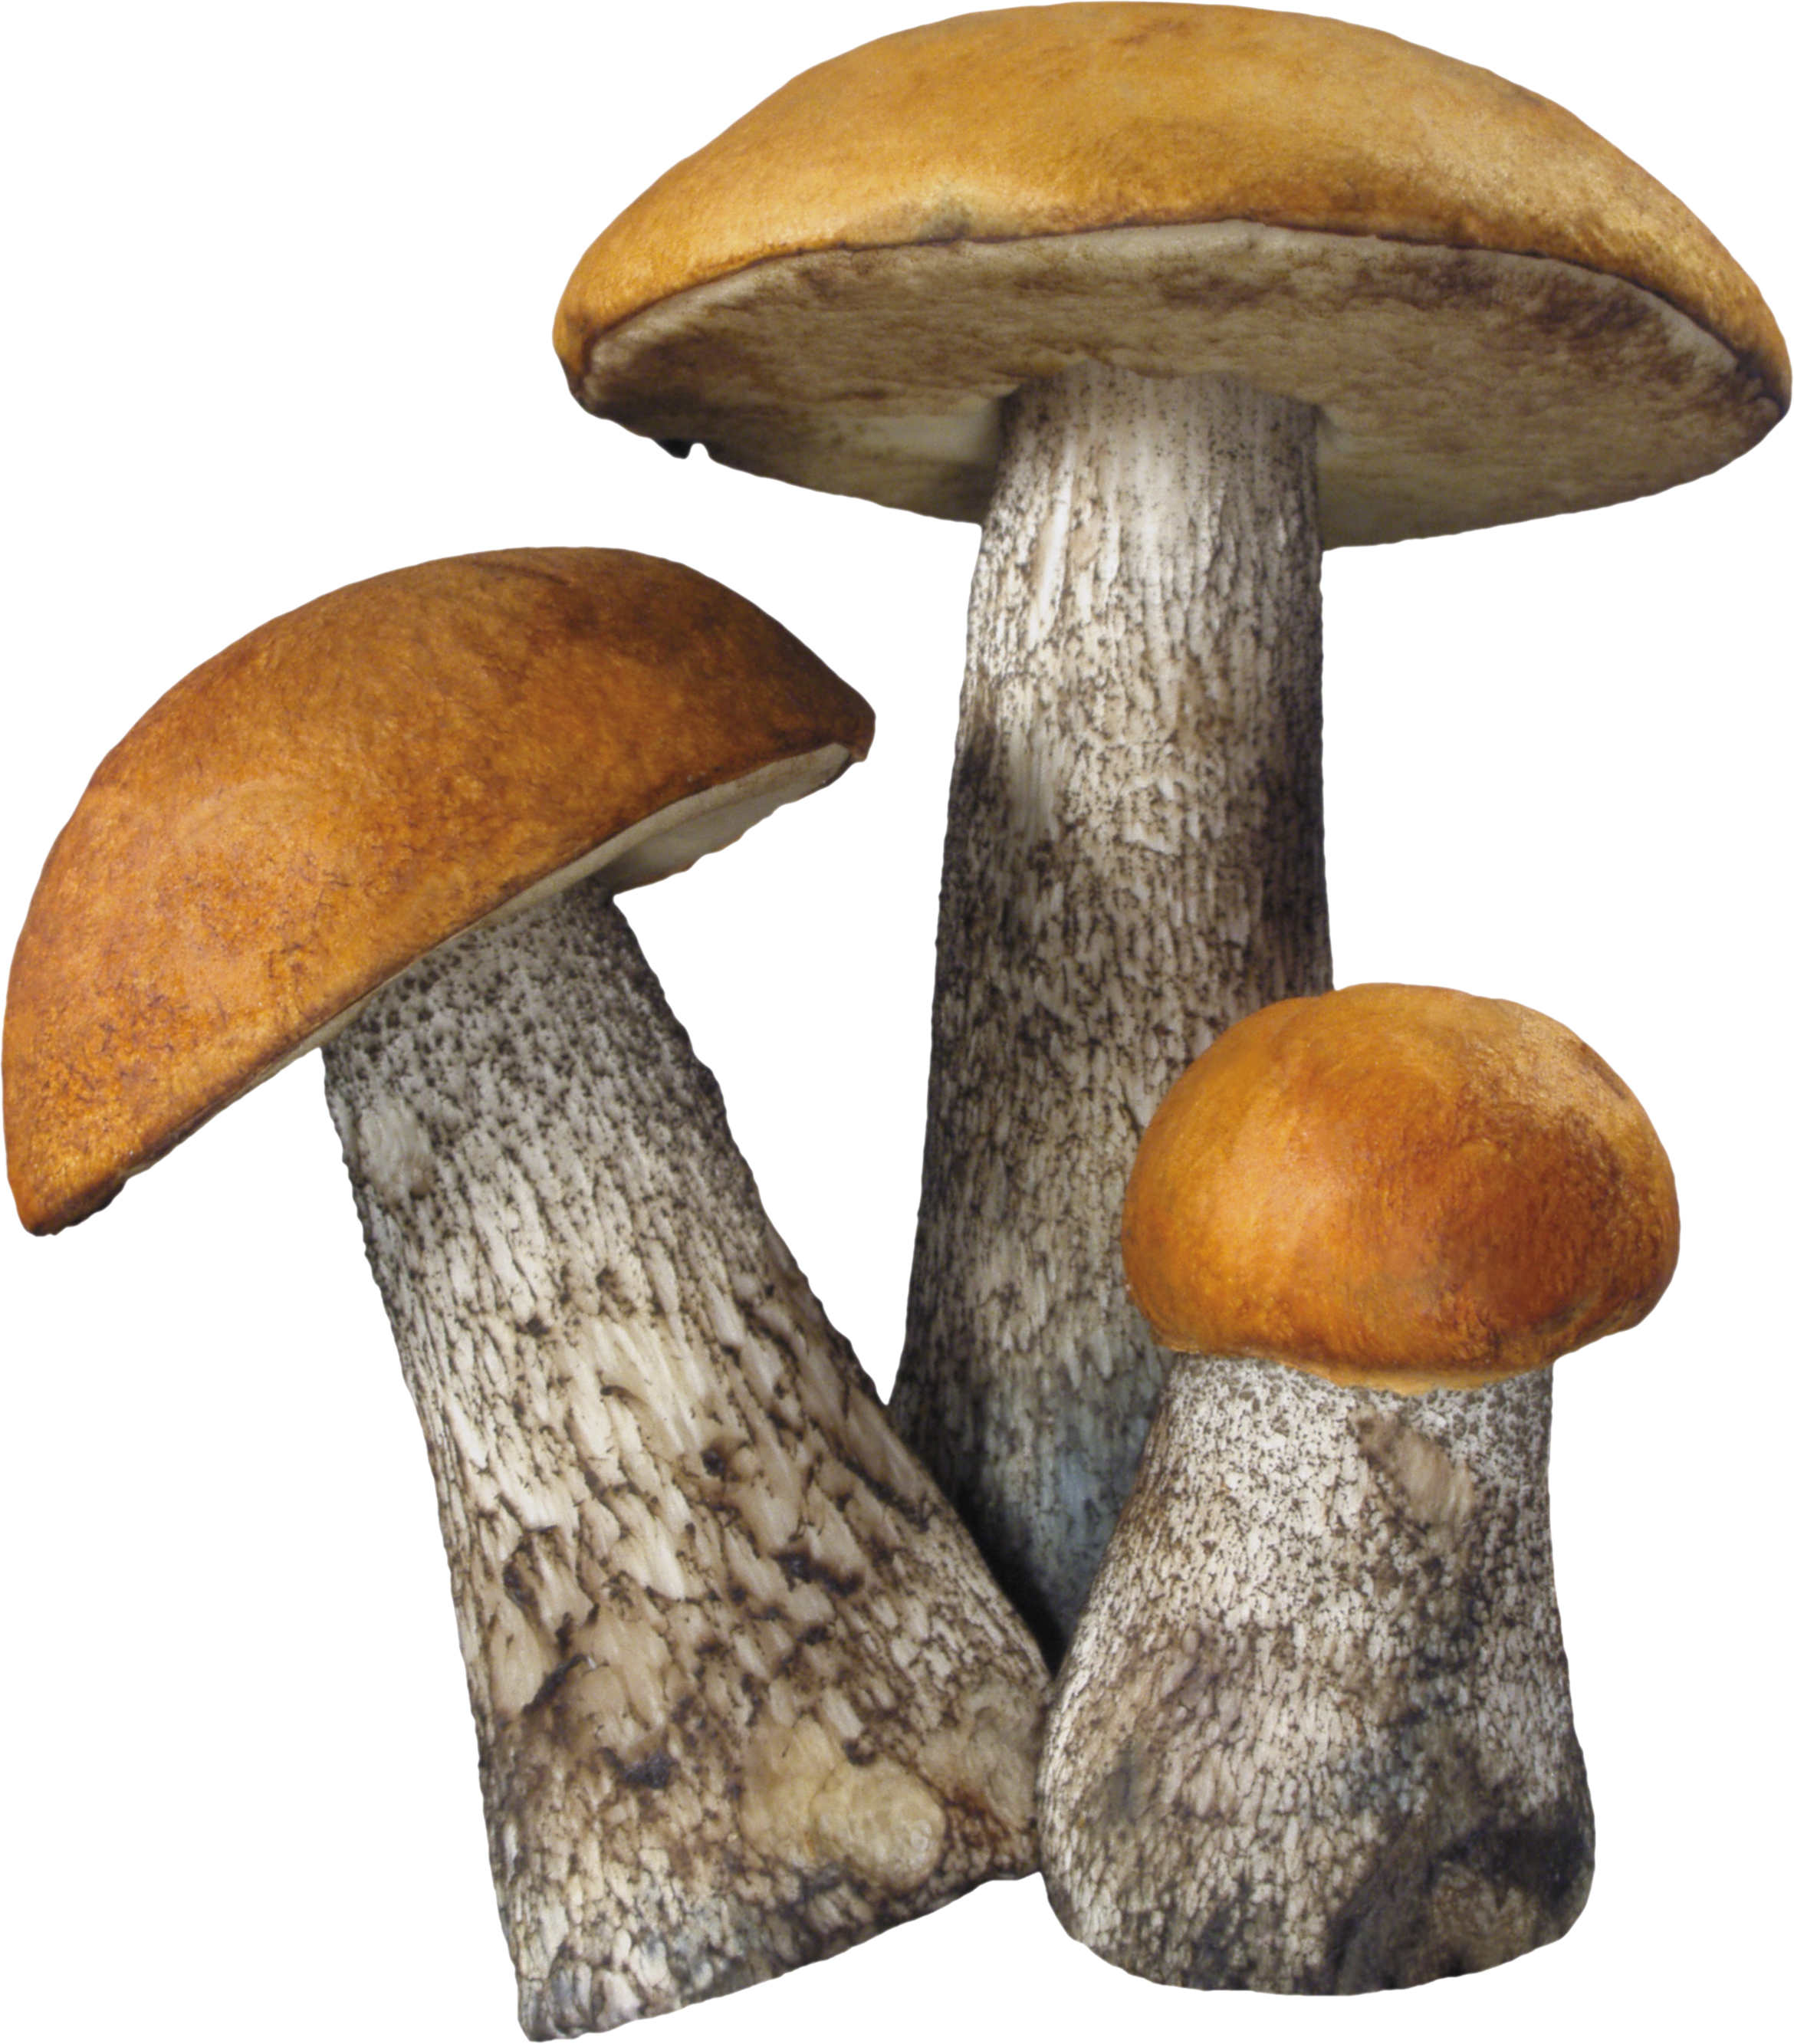 mushrooms clipart poisonous mushroom